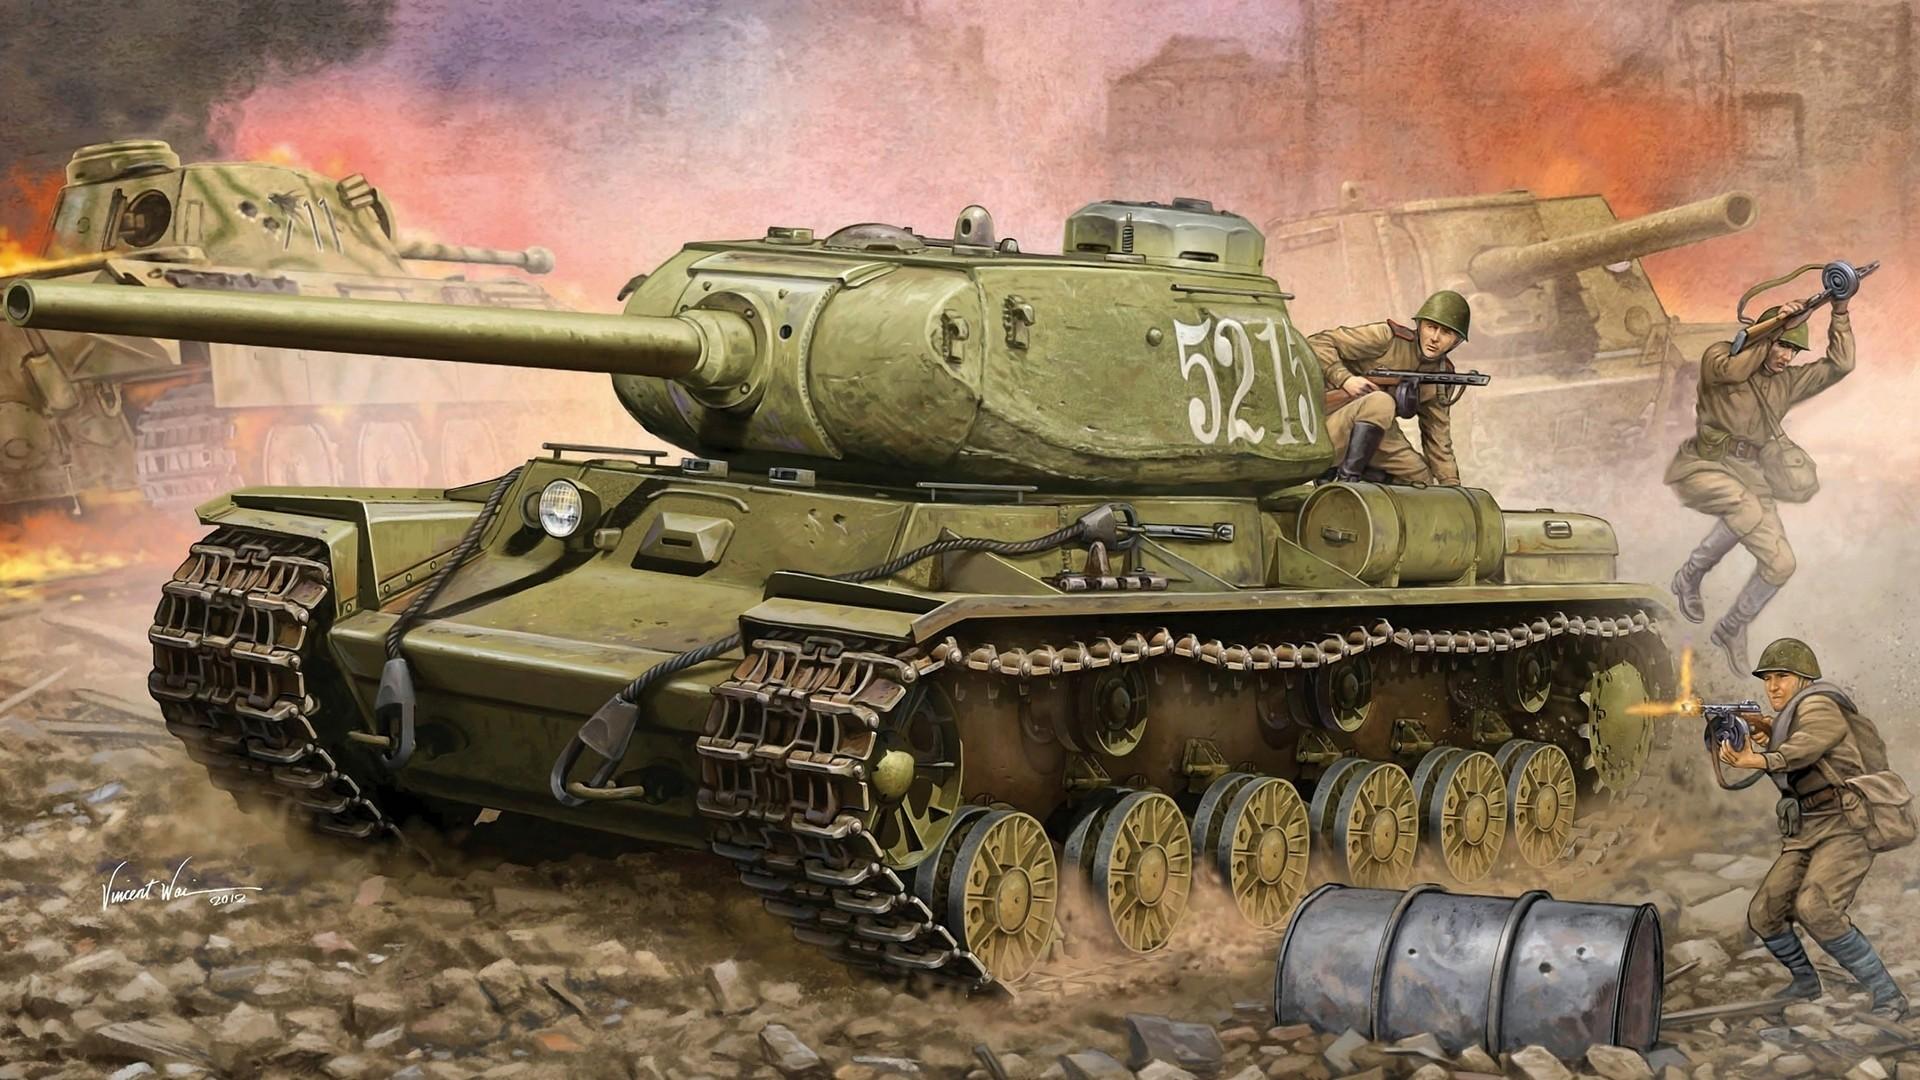 Soldiers war tanks panzer wallpaper. PC